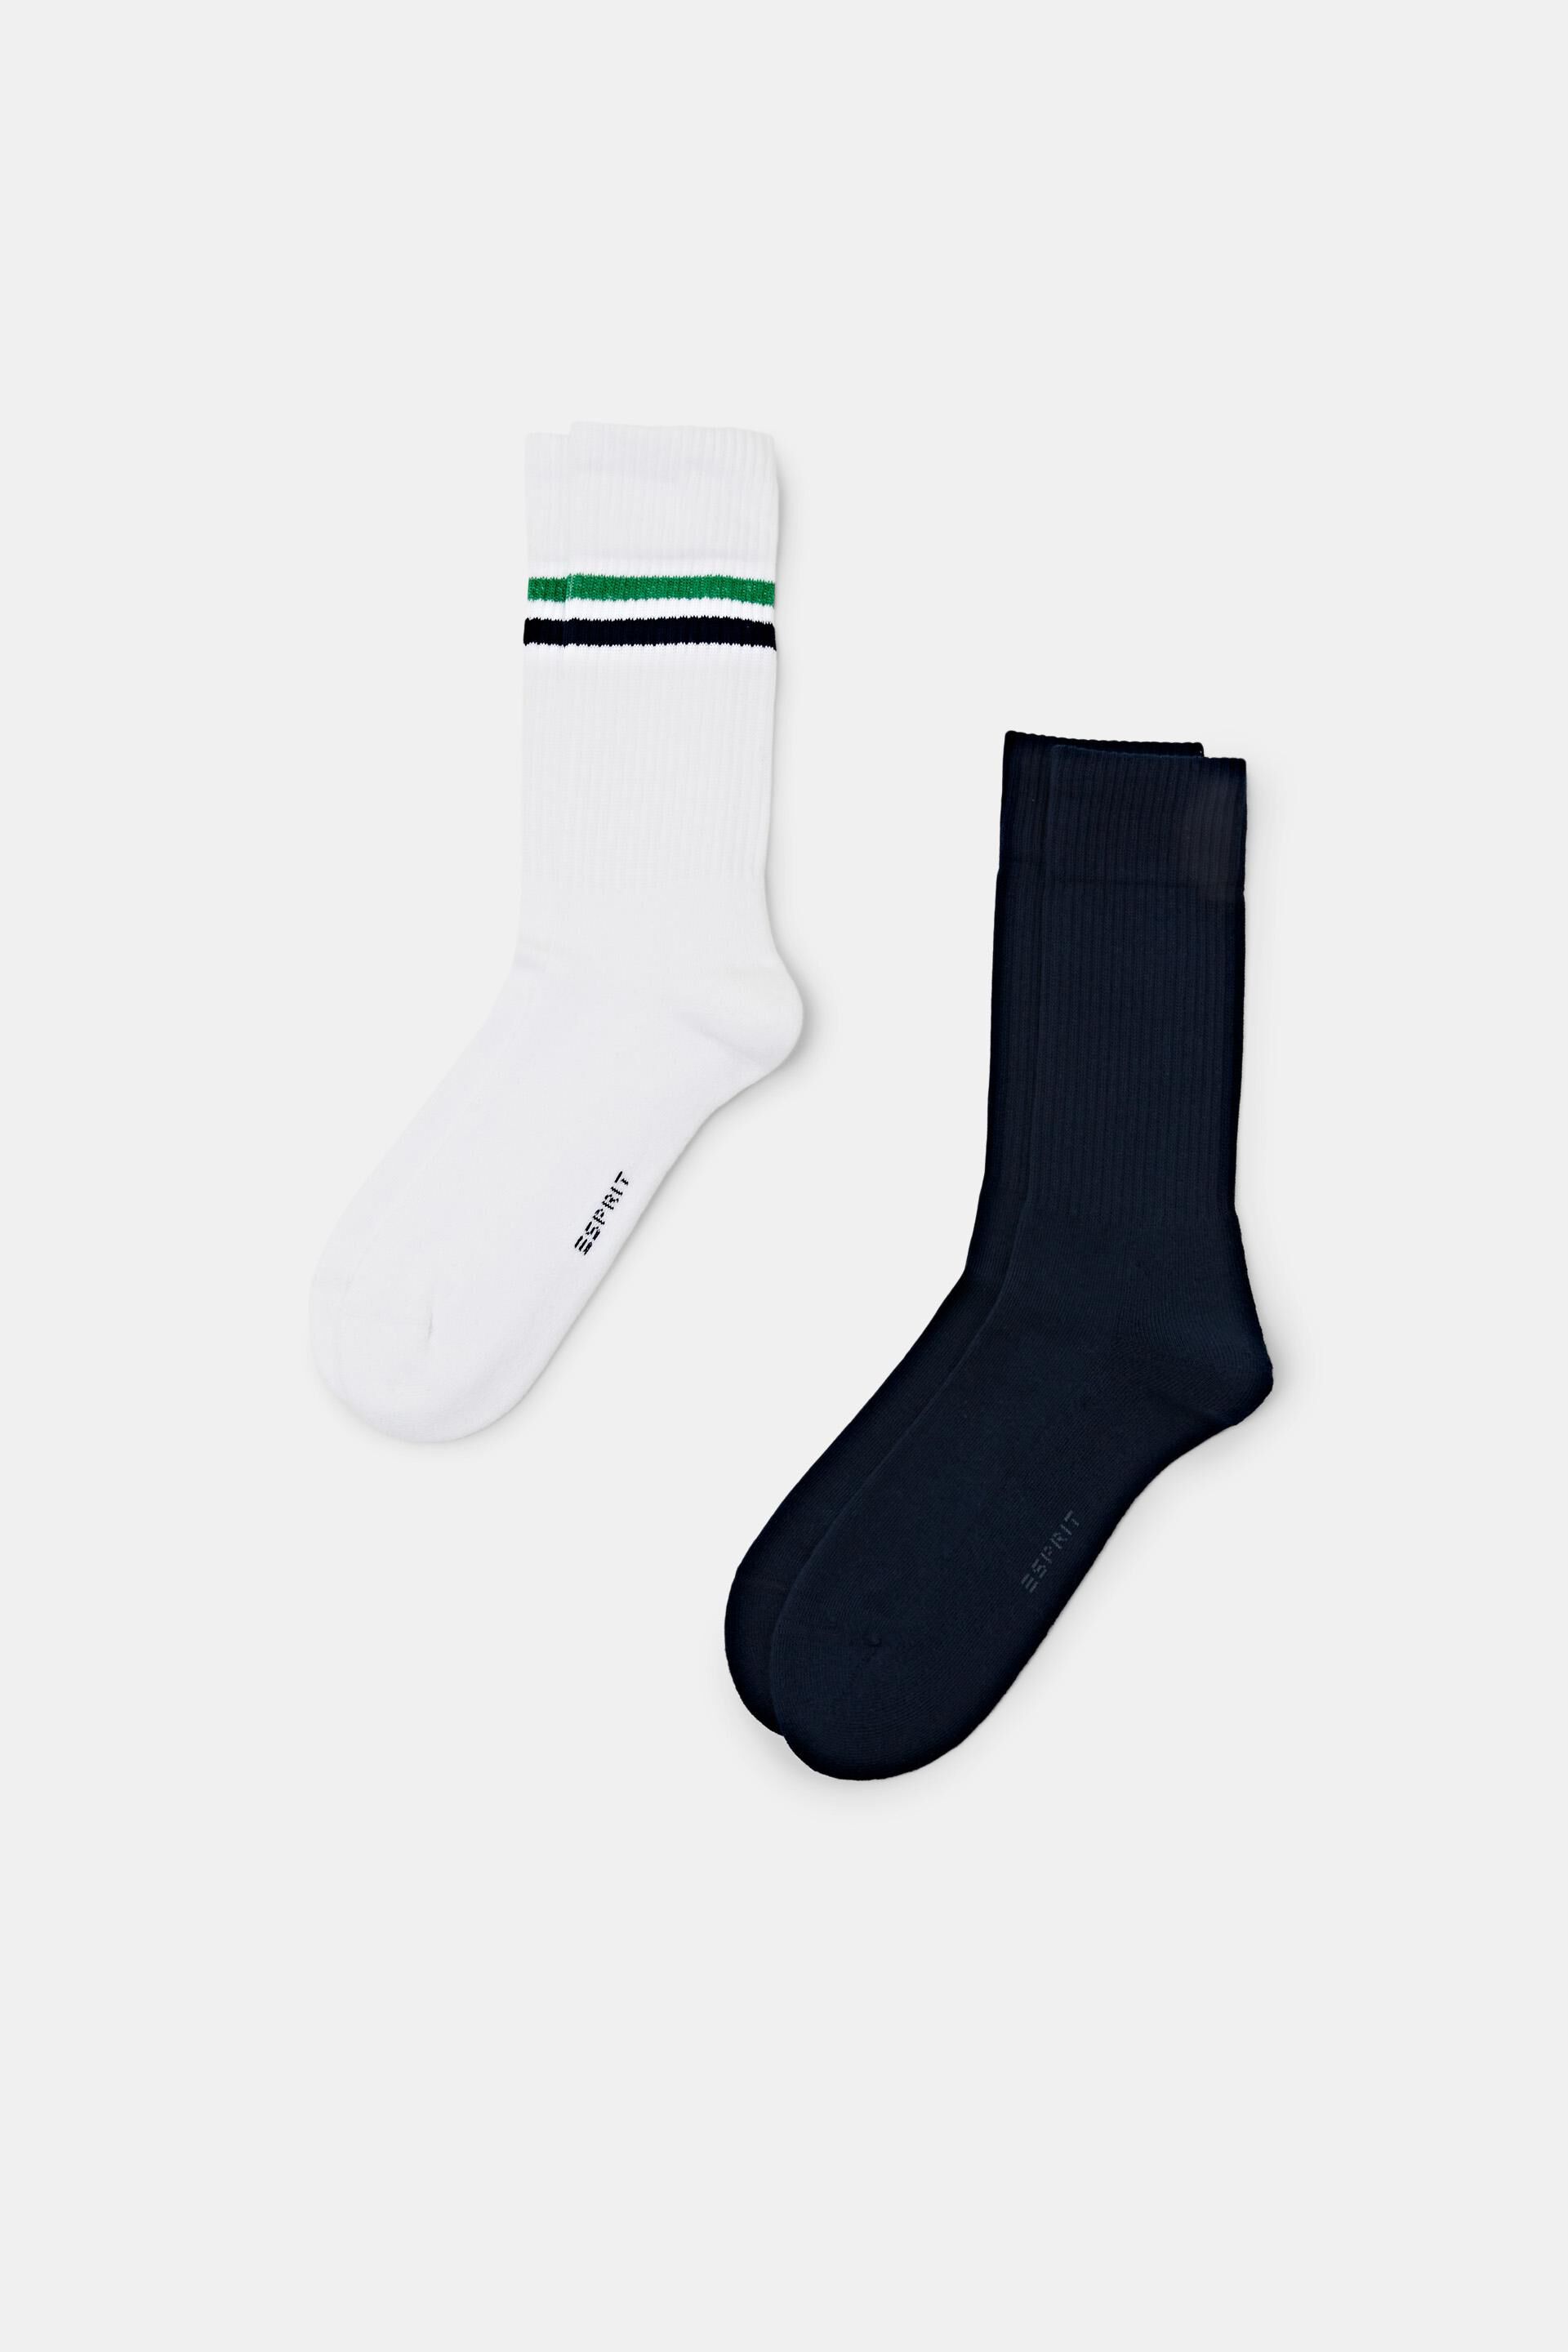 Esprit Mode 2-pack of athletic socks, organic cotton